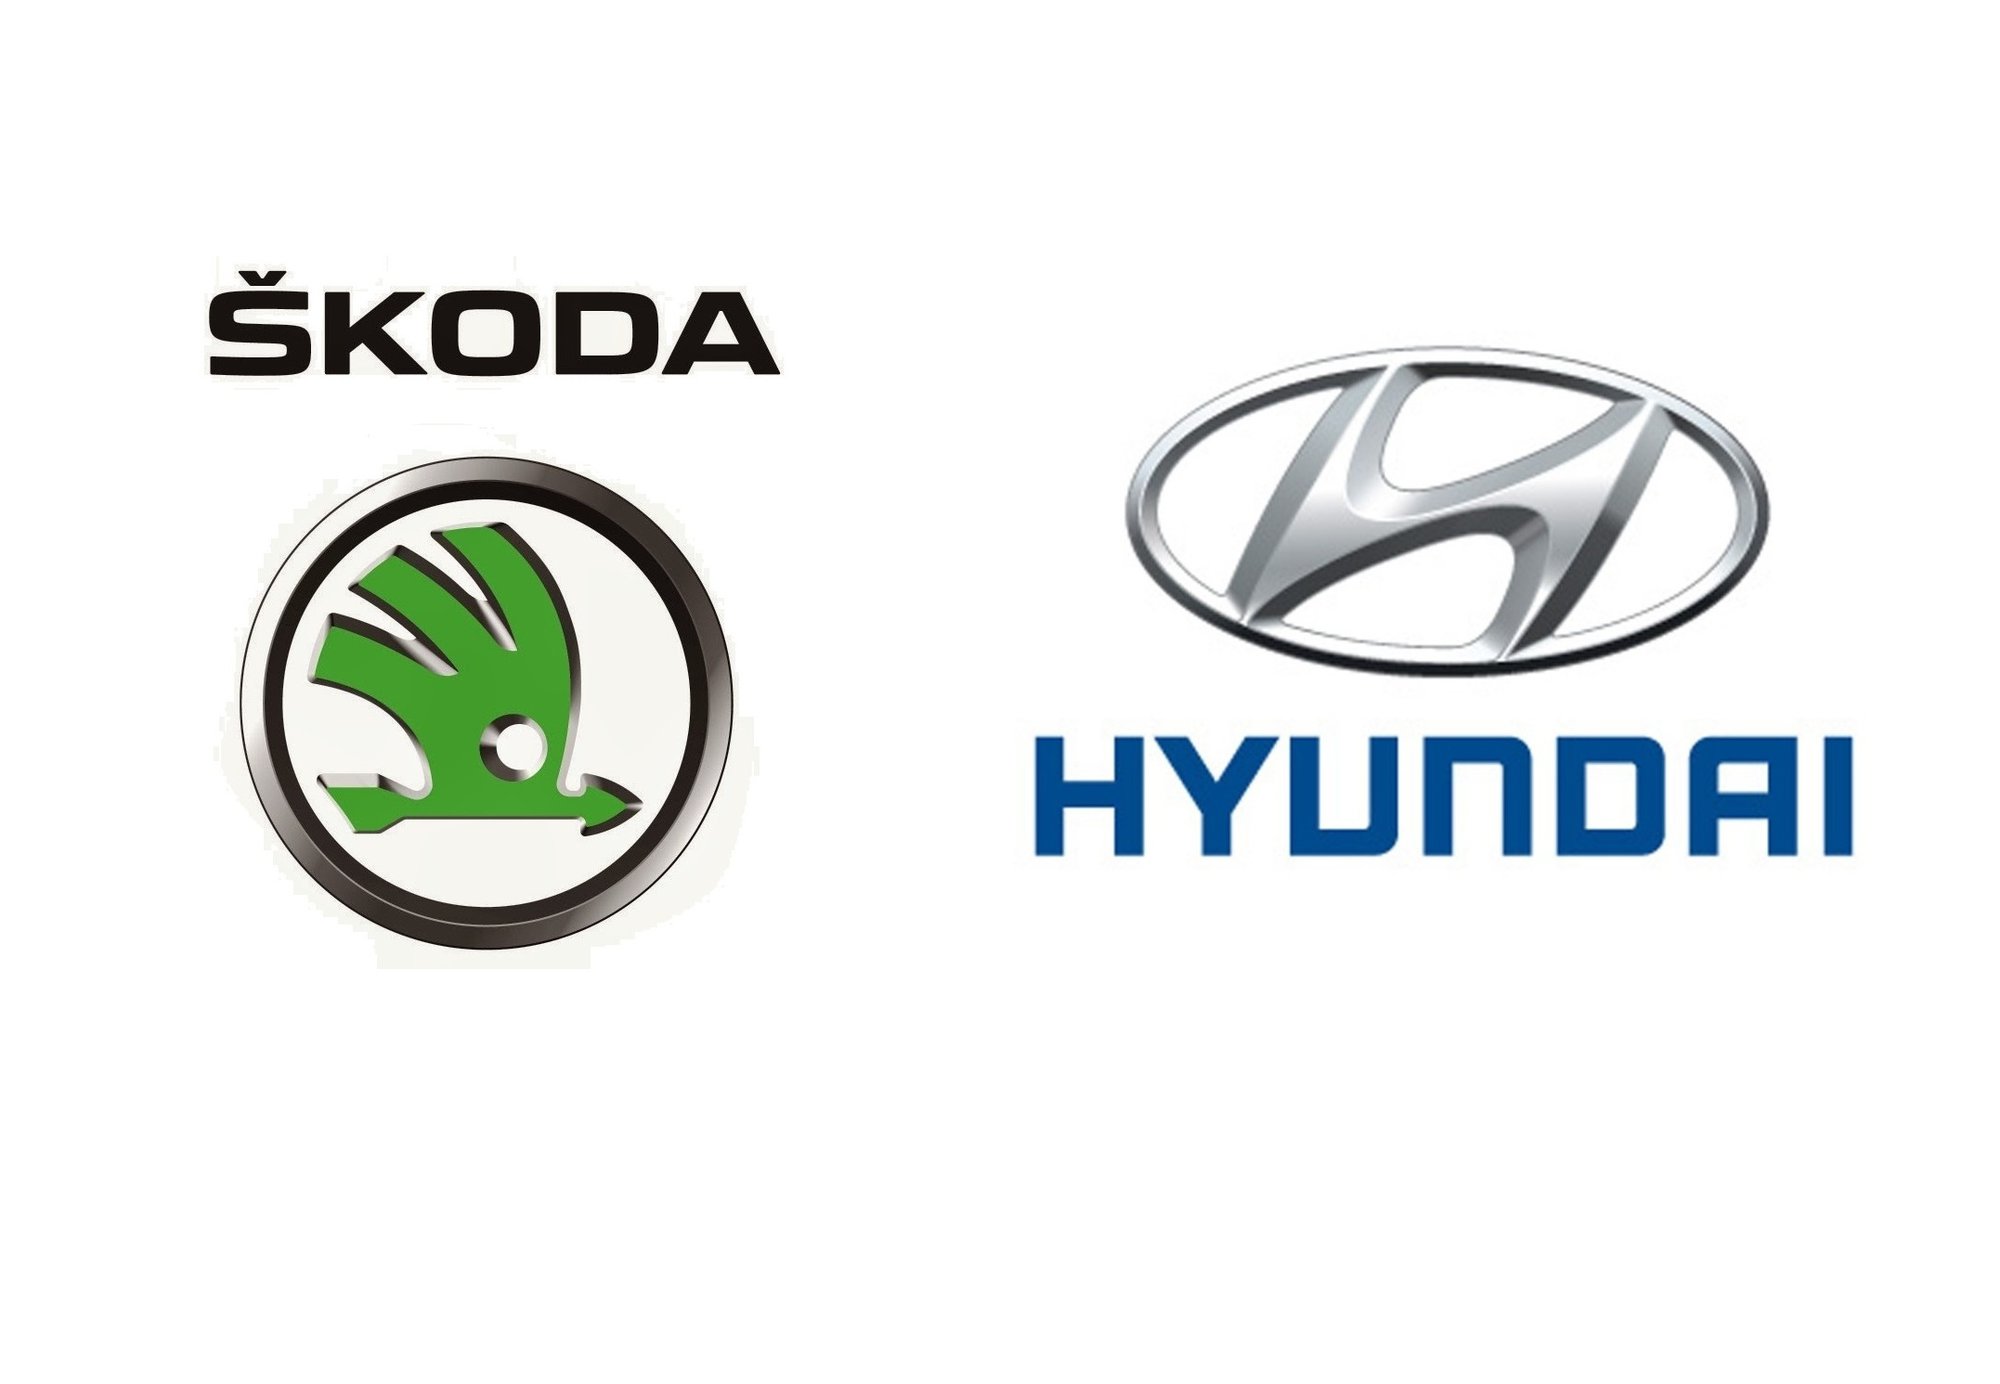 Škoda a Hyundai logo (2015)